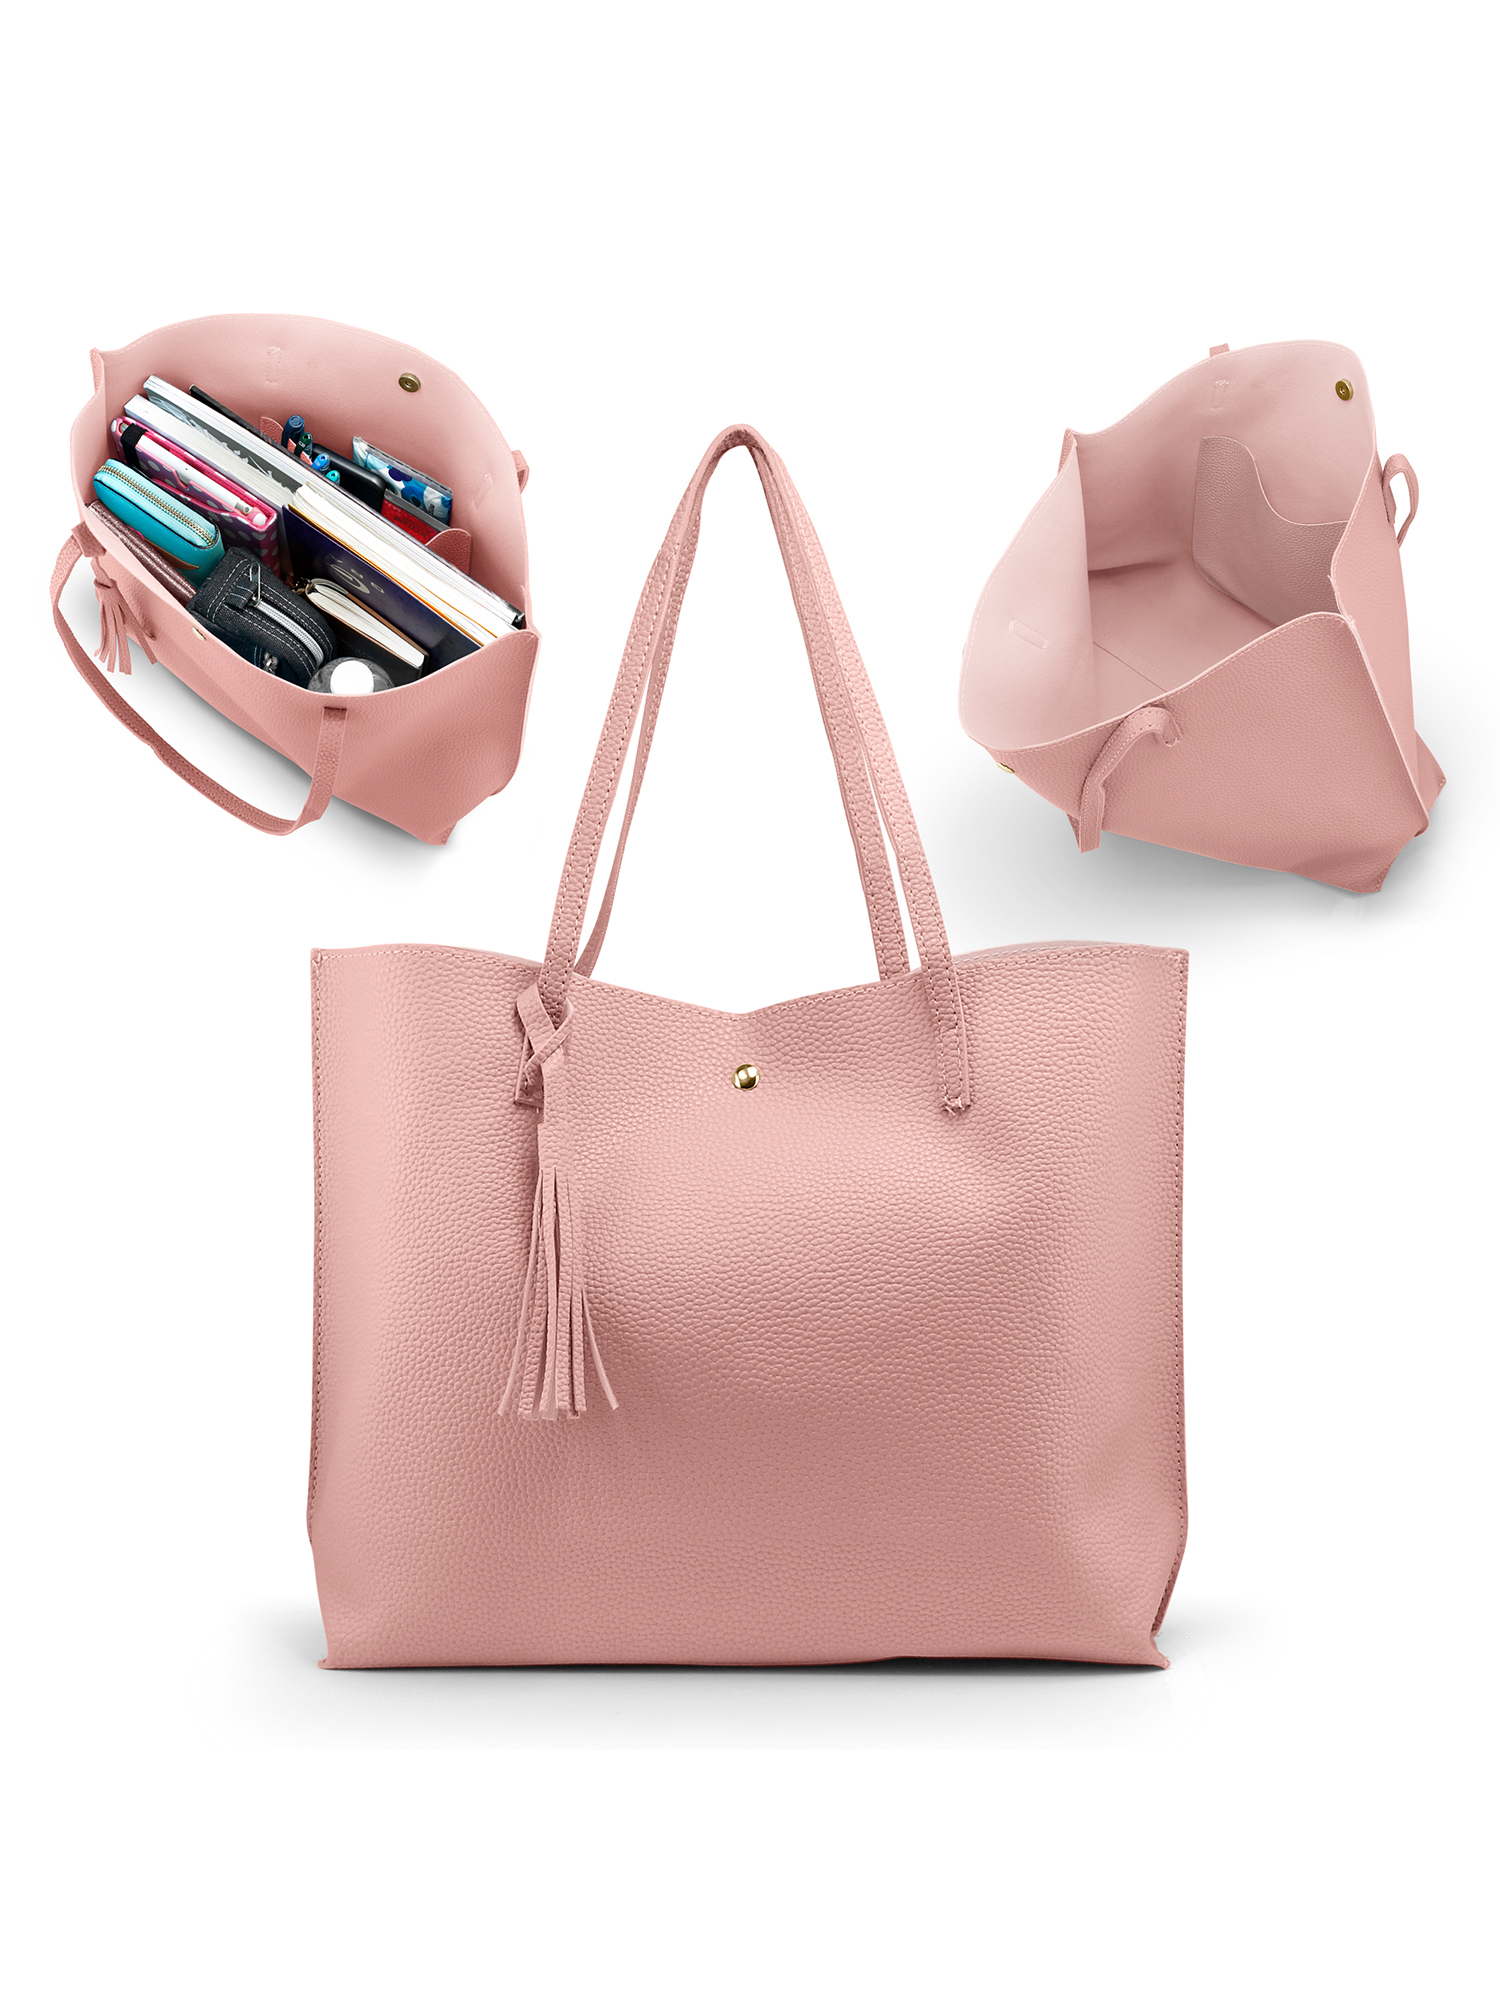 Oct17 Women Tote Bag Tassels Leather Shoulder Handbags Fashion Ladies Purses Satchel Messenger Bags - Pink, Women's, Size: One Size